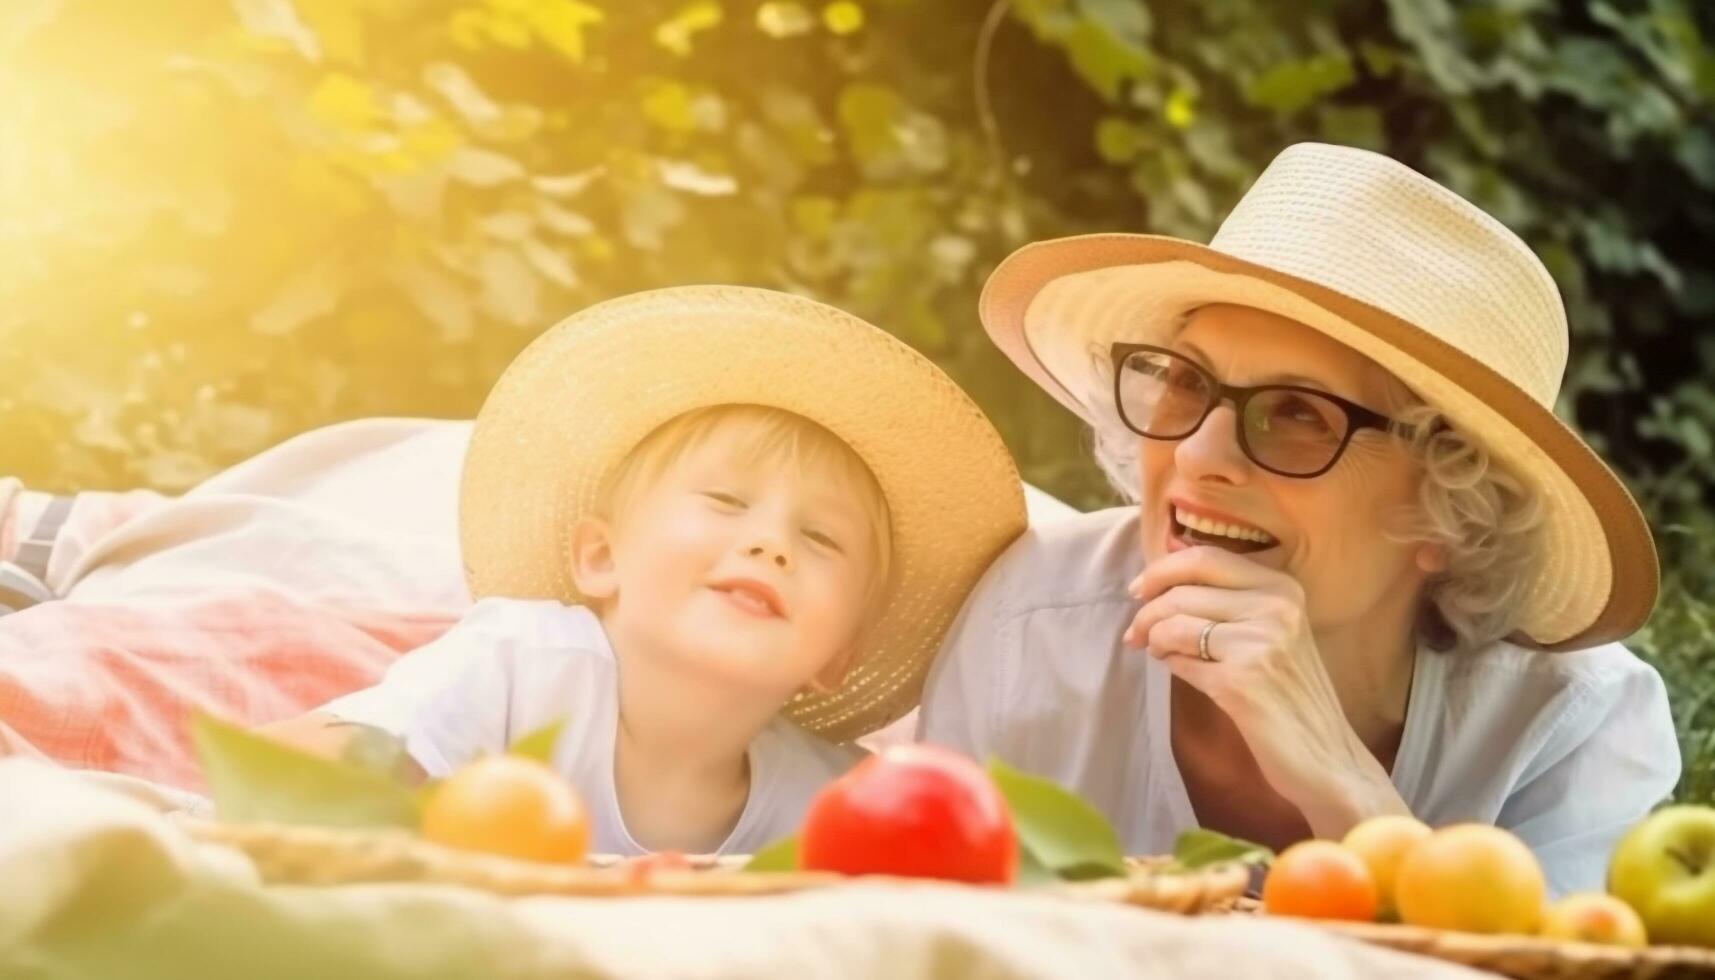 Smiling family enjoys summer picnic, bonding over fresh fruit generated by AI photo